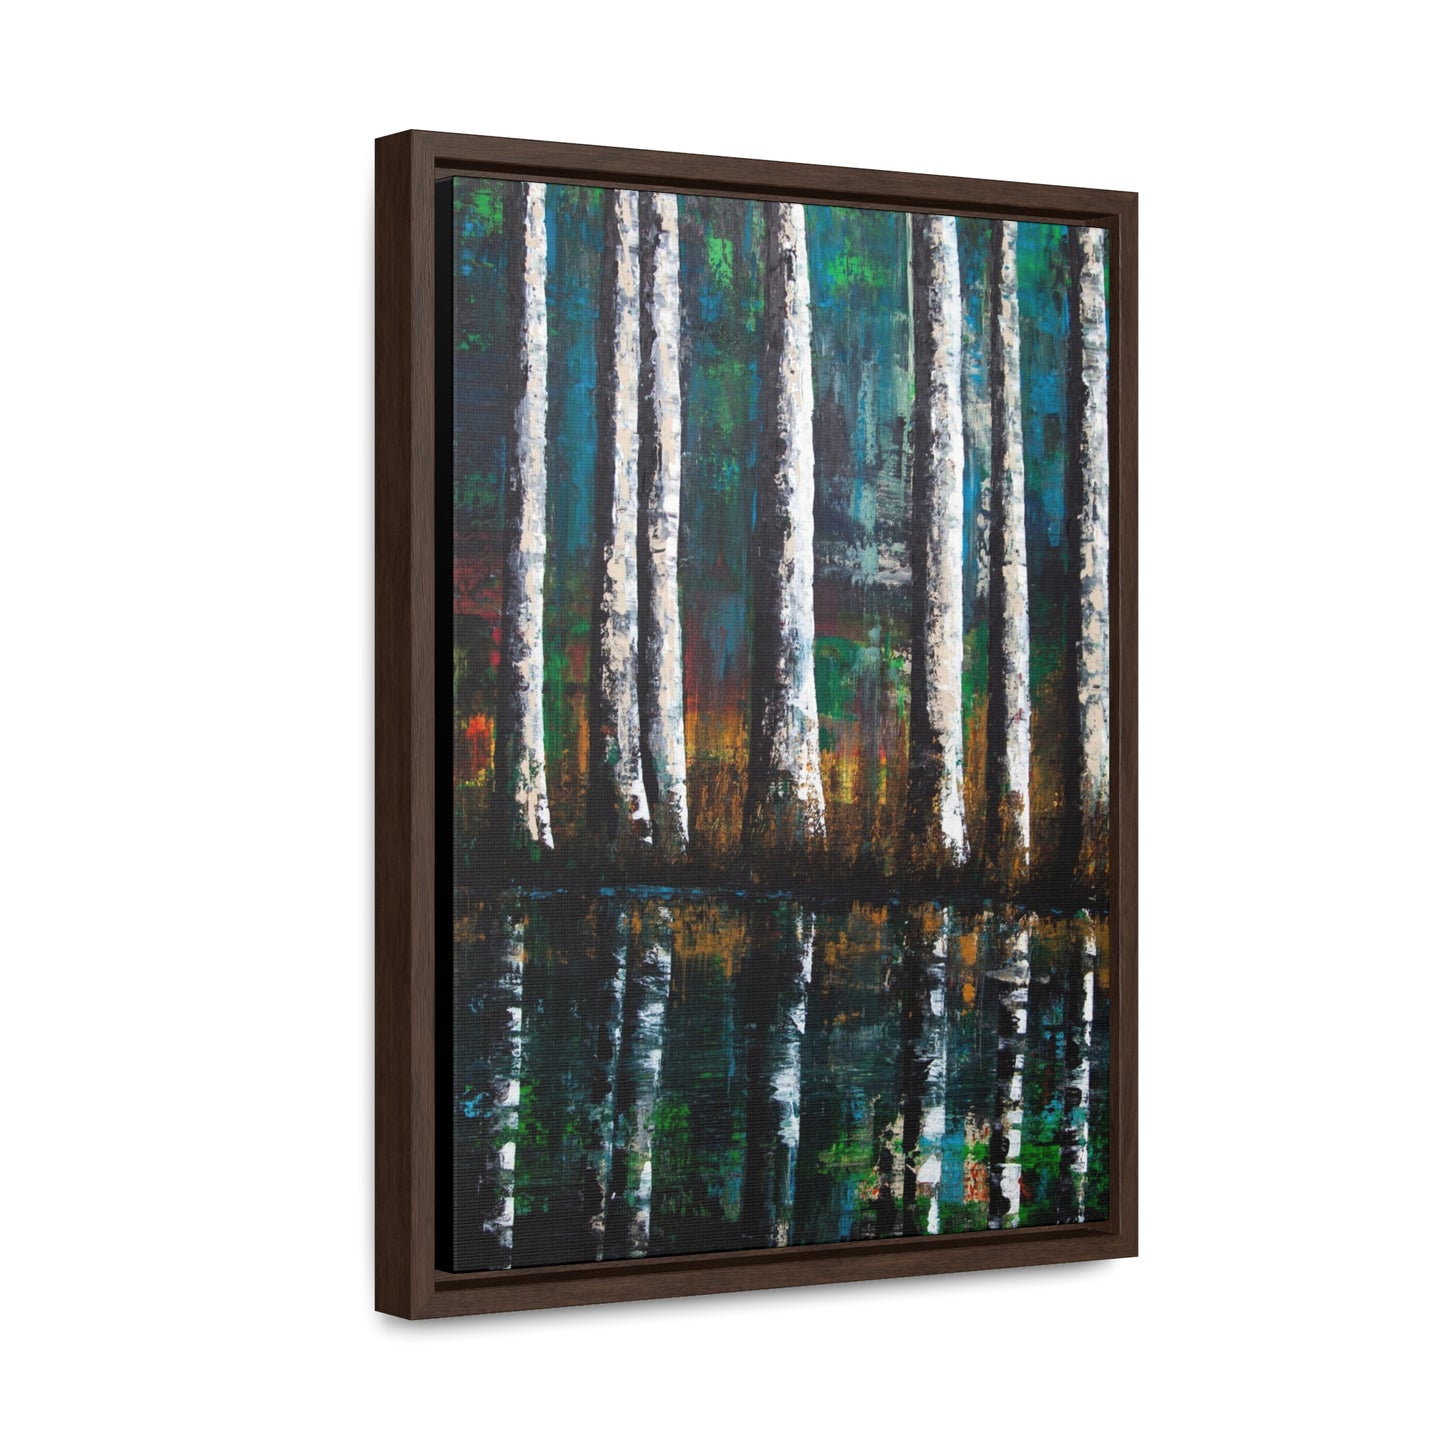 Framed Wall Art - Reflections